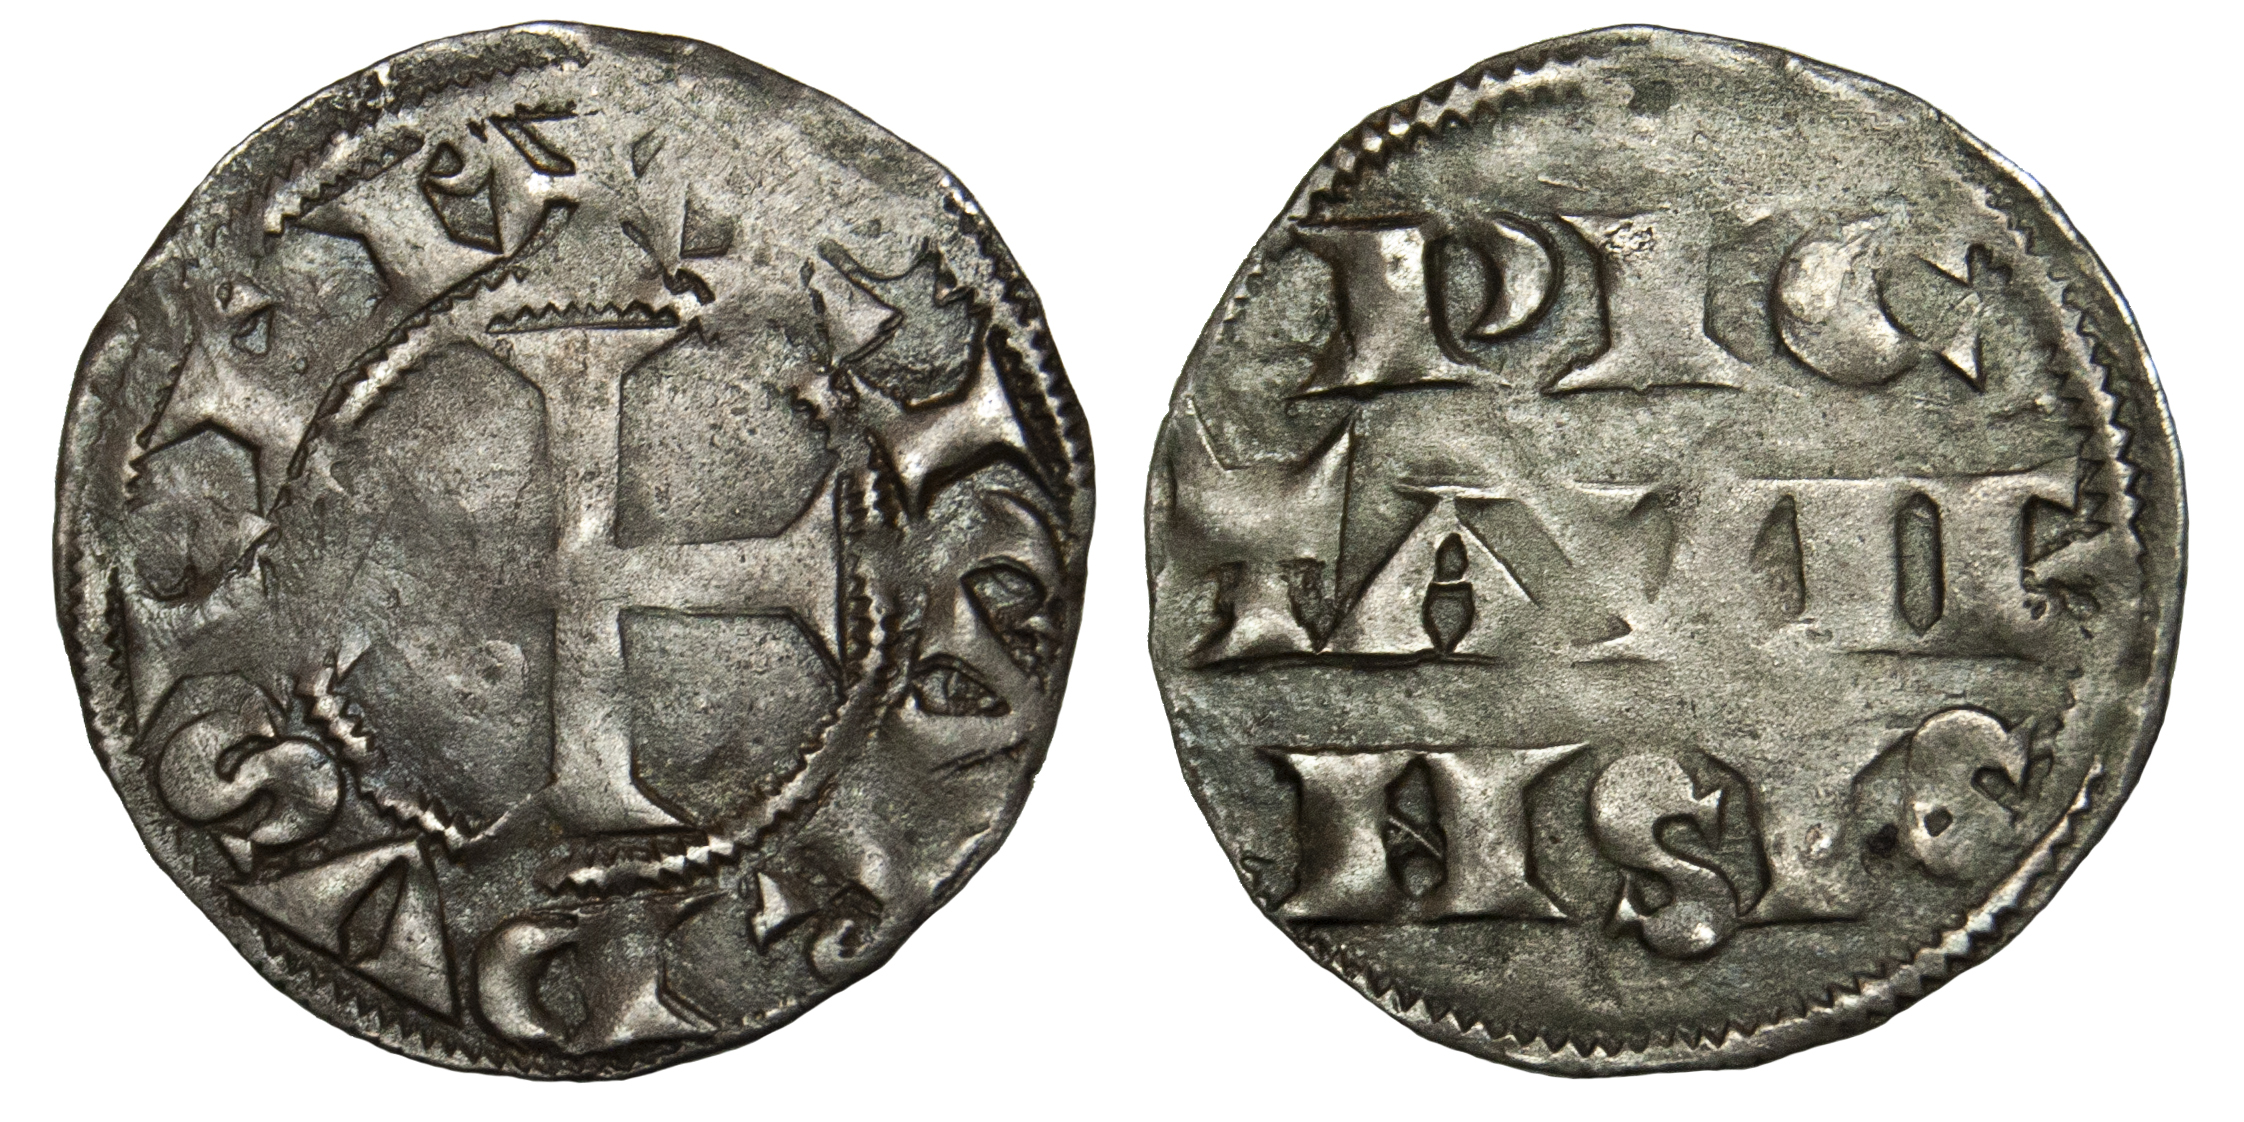 France, Anglo-Gallic, Richard the Lionheart, Silver Denier